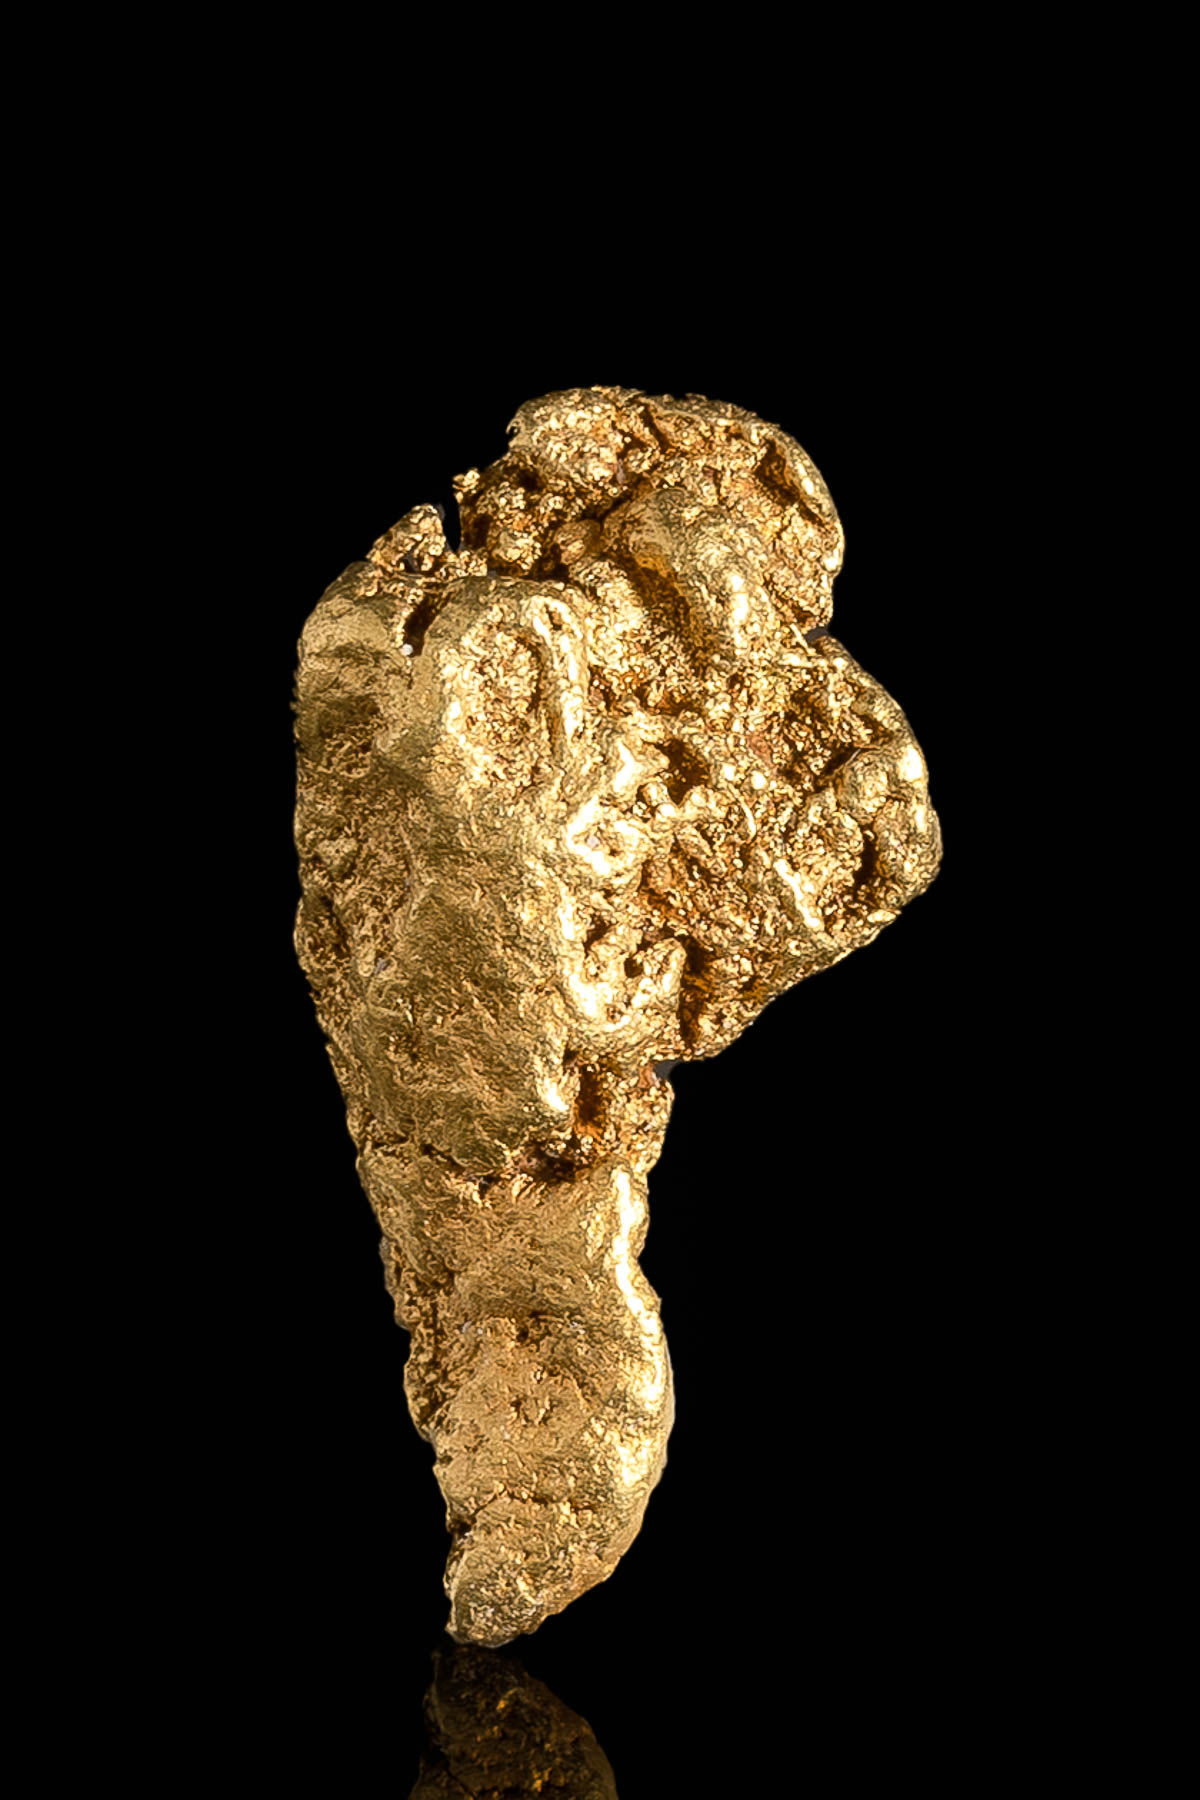 Staff Shaped Natural Gold Nugget - 3.35 grams